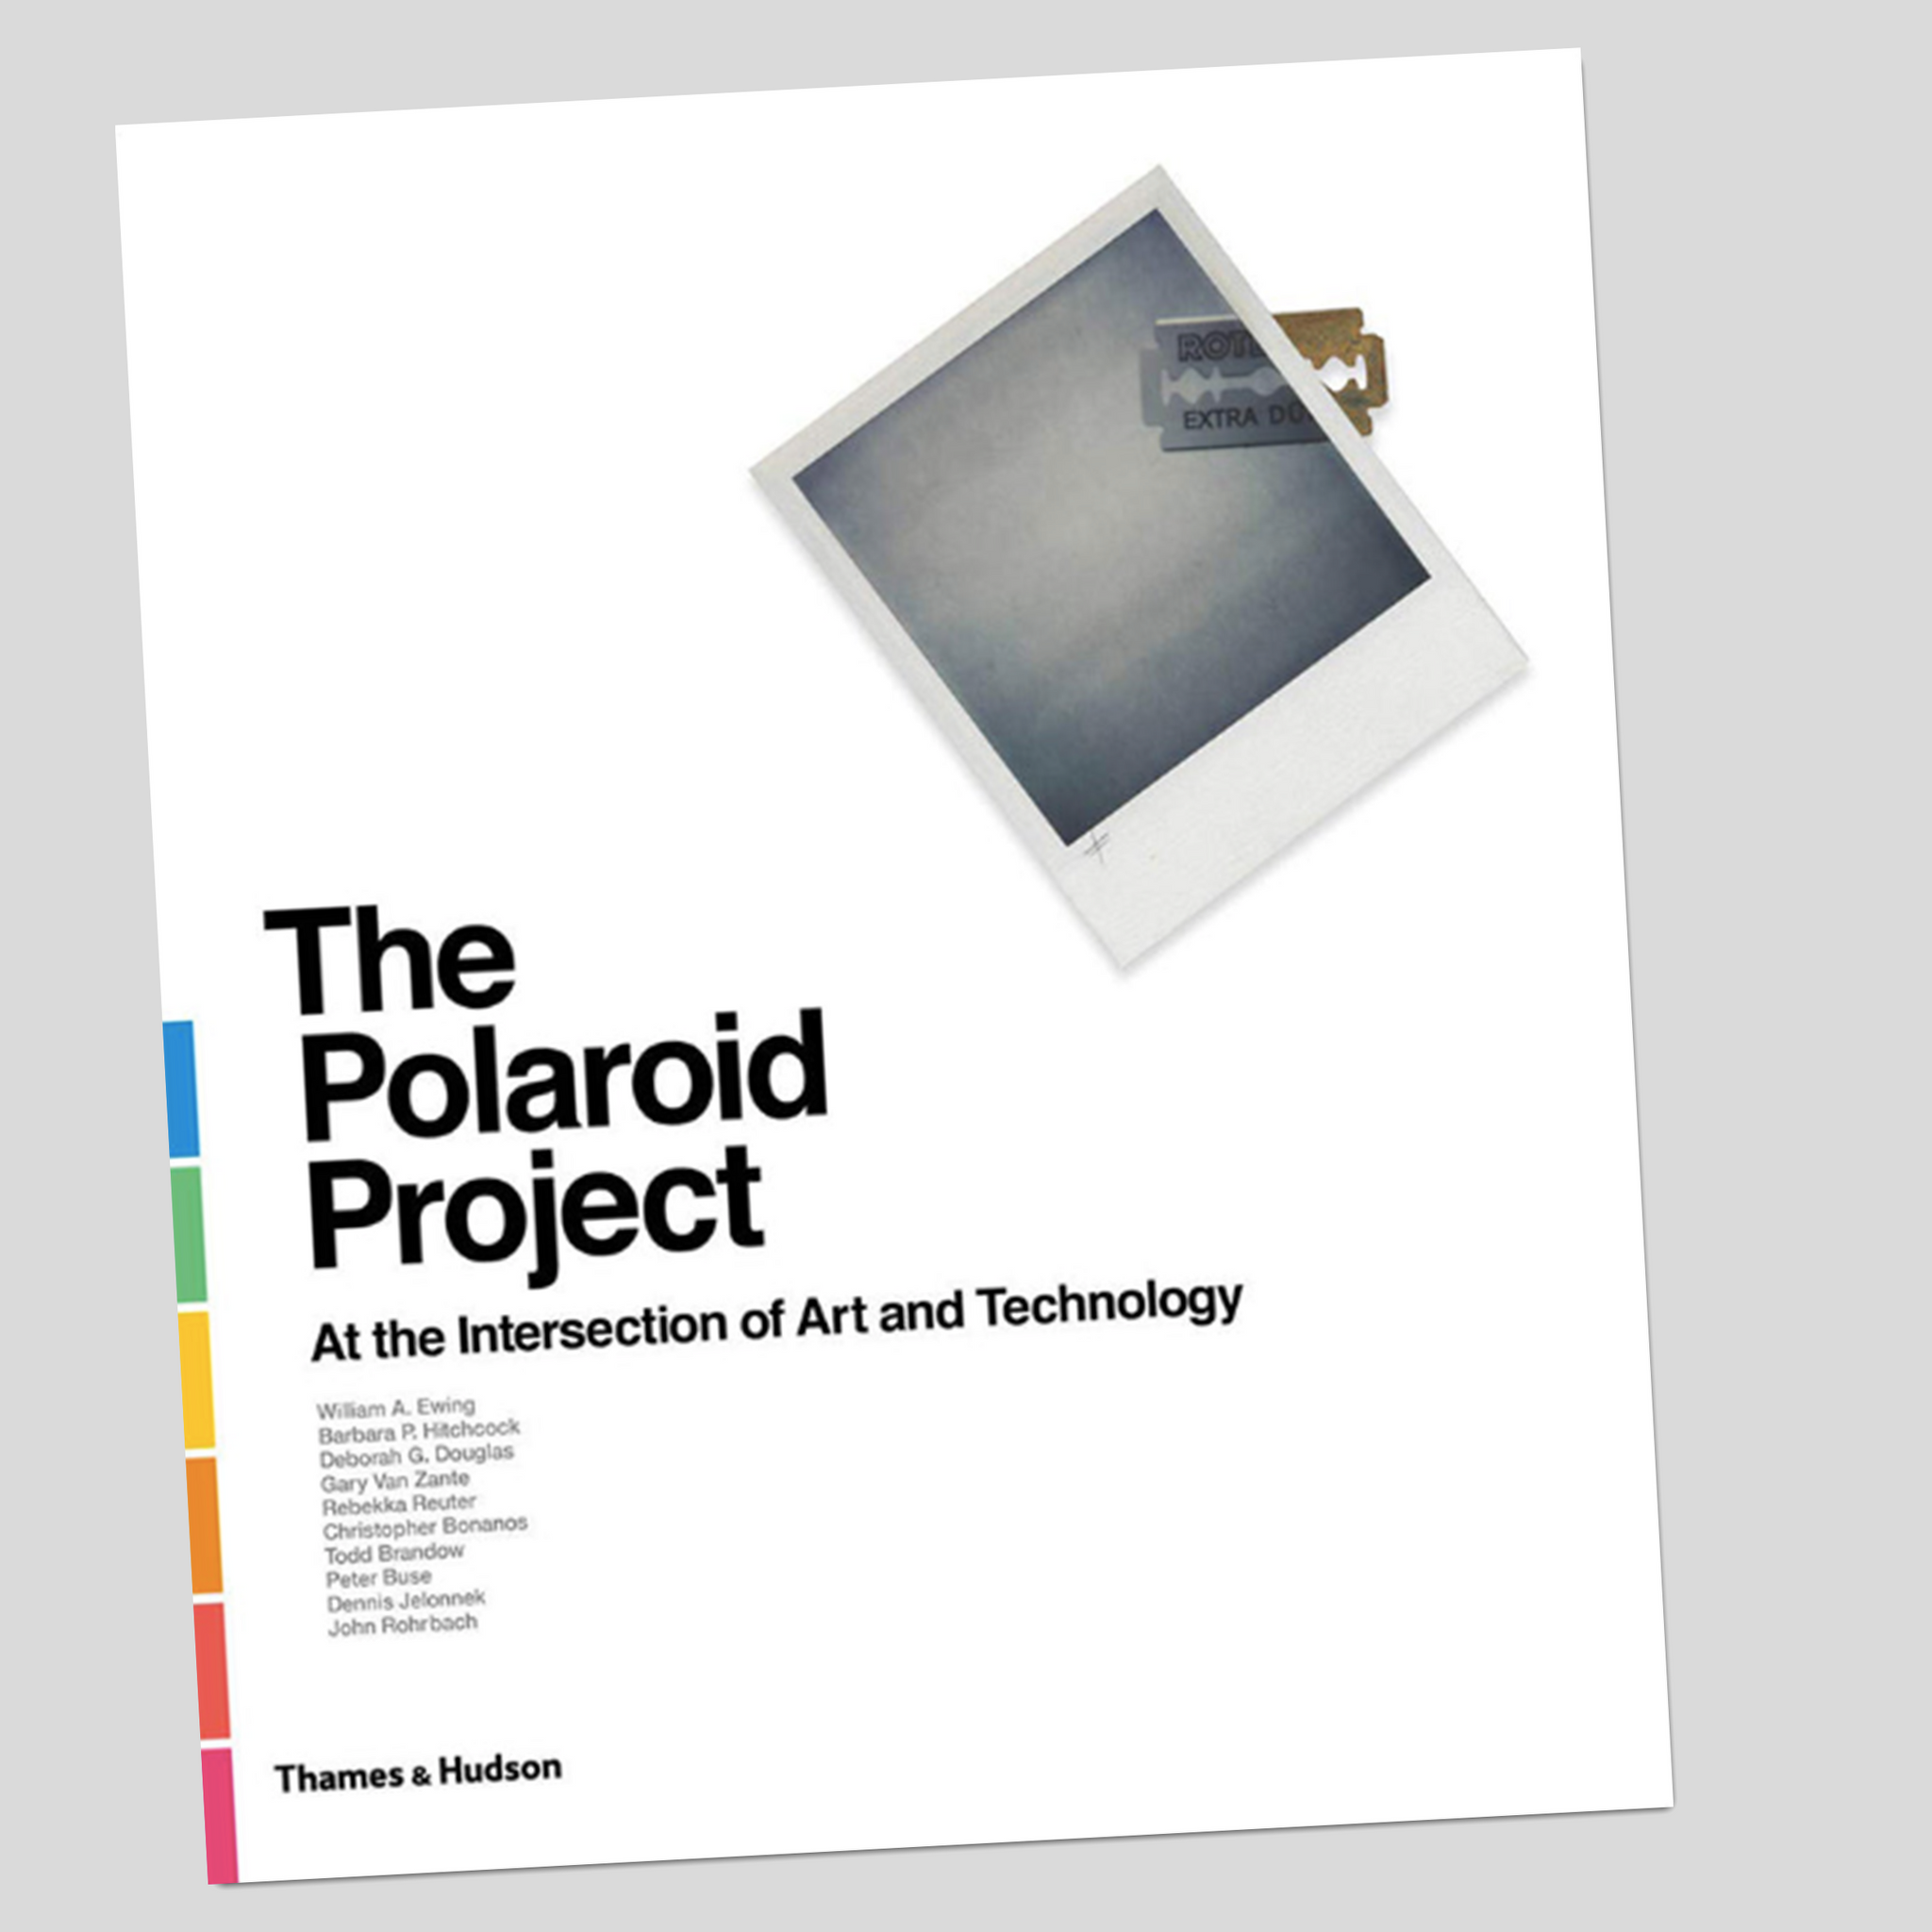 The Polaroid Project